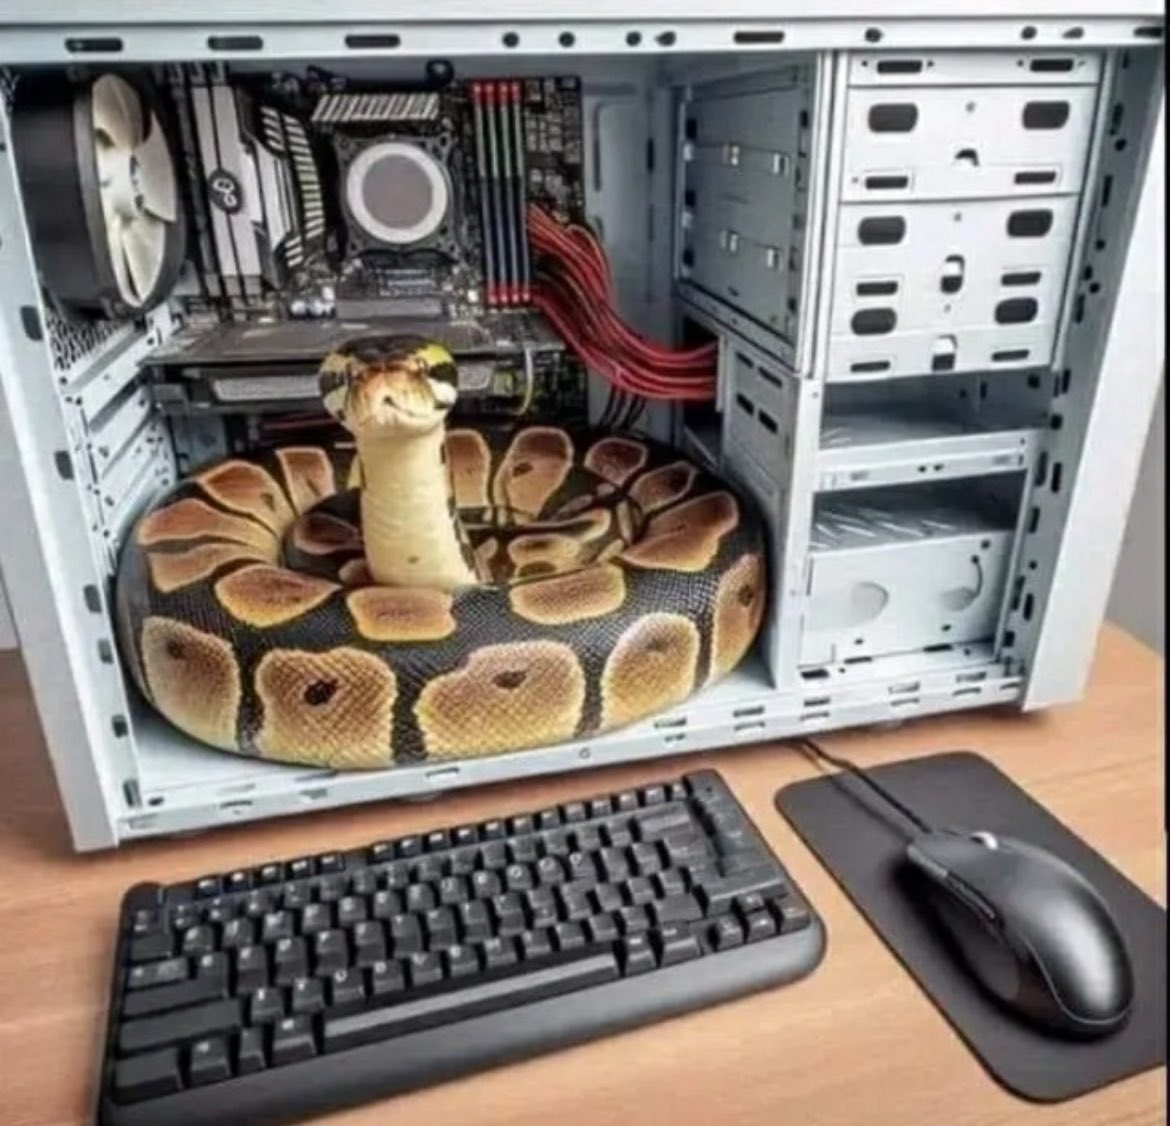 just installed python, what next